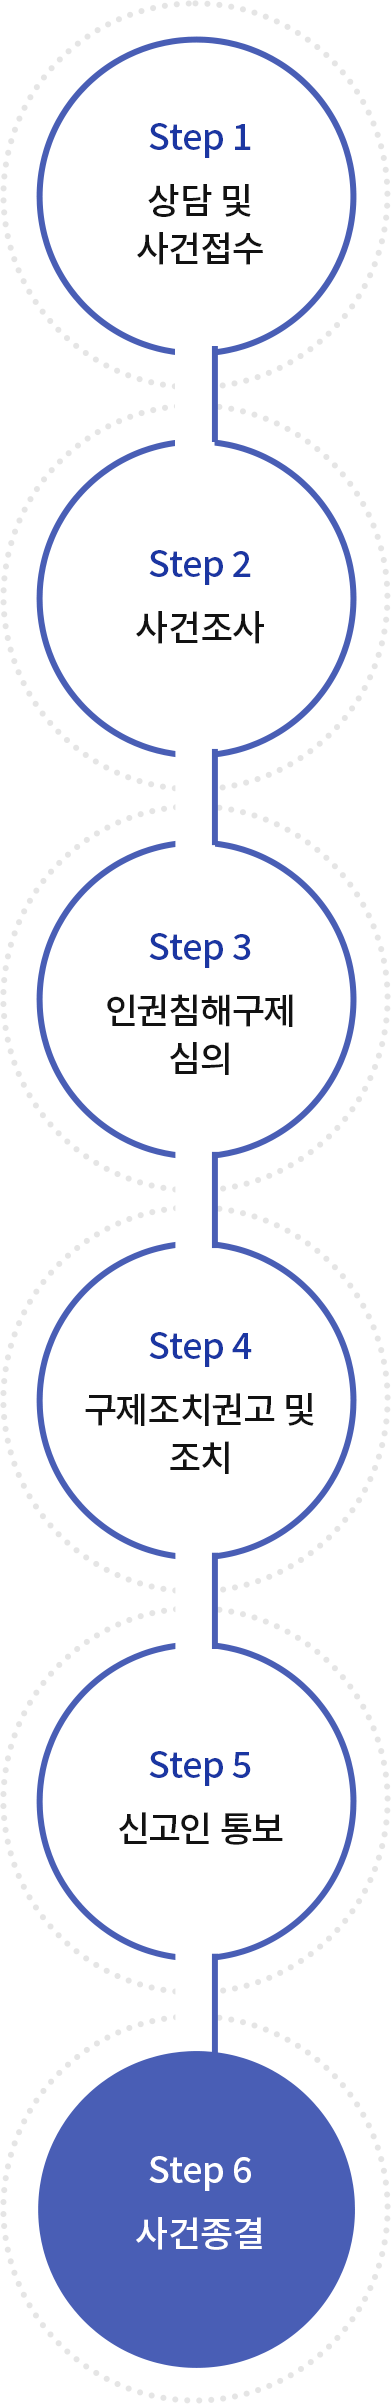 tep 1-상담 및 사건접수, Step 2-사건조사, Step 3-인권침해구제 심의, Step 4-구제조치권고 및 조치, Step 5-신고인 통보, Step 6-사건종결